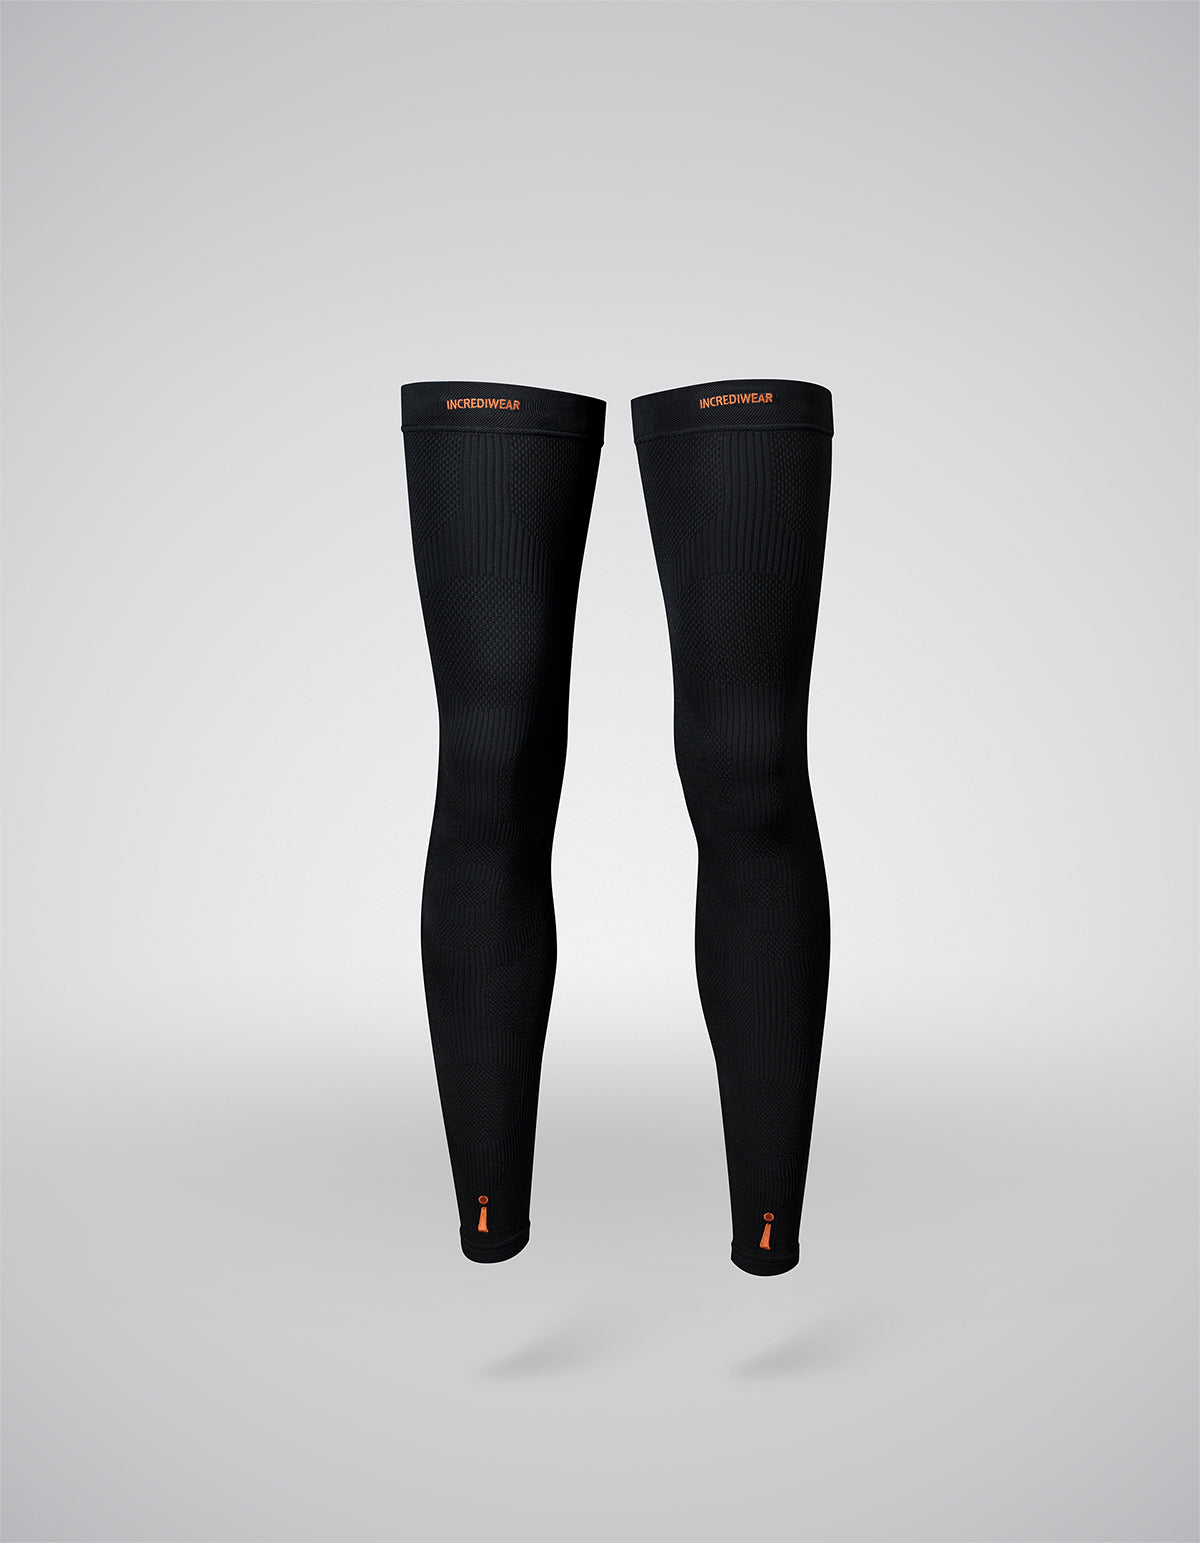 NEW Full Leg Sleeves Long Compression Sleeve Knee Large (1 Pair), Black &  Gray